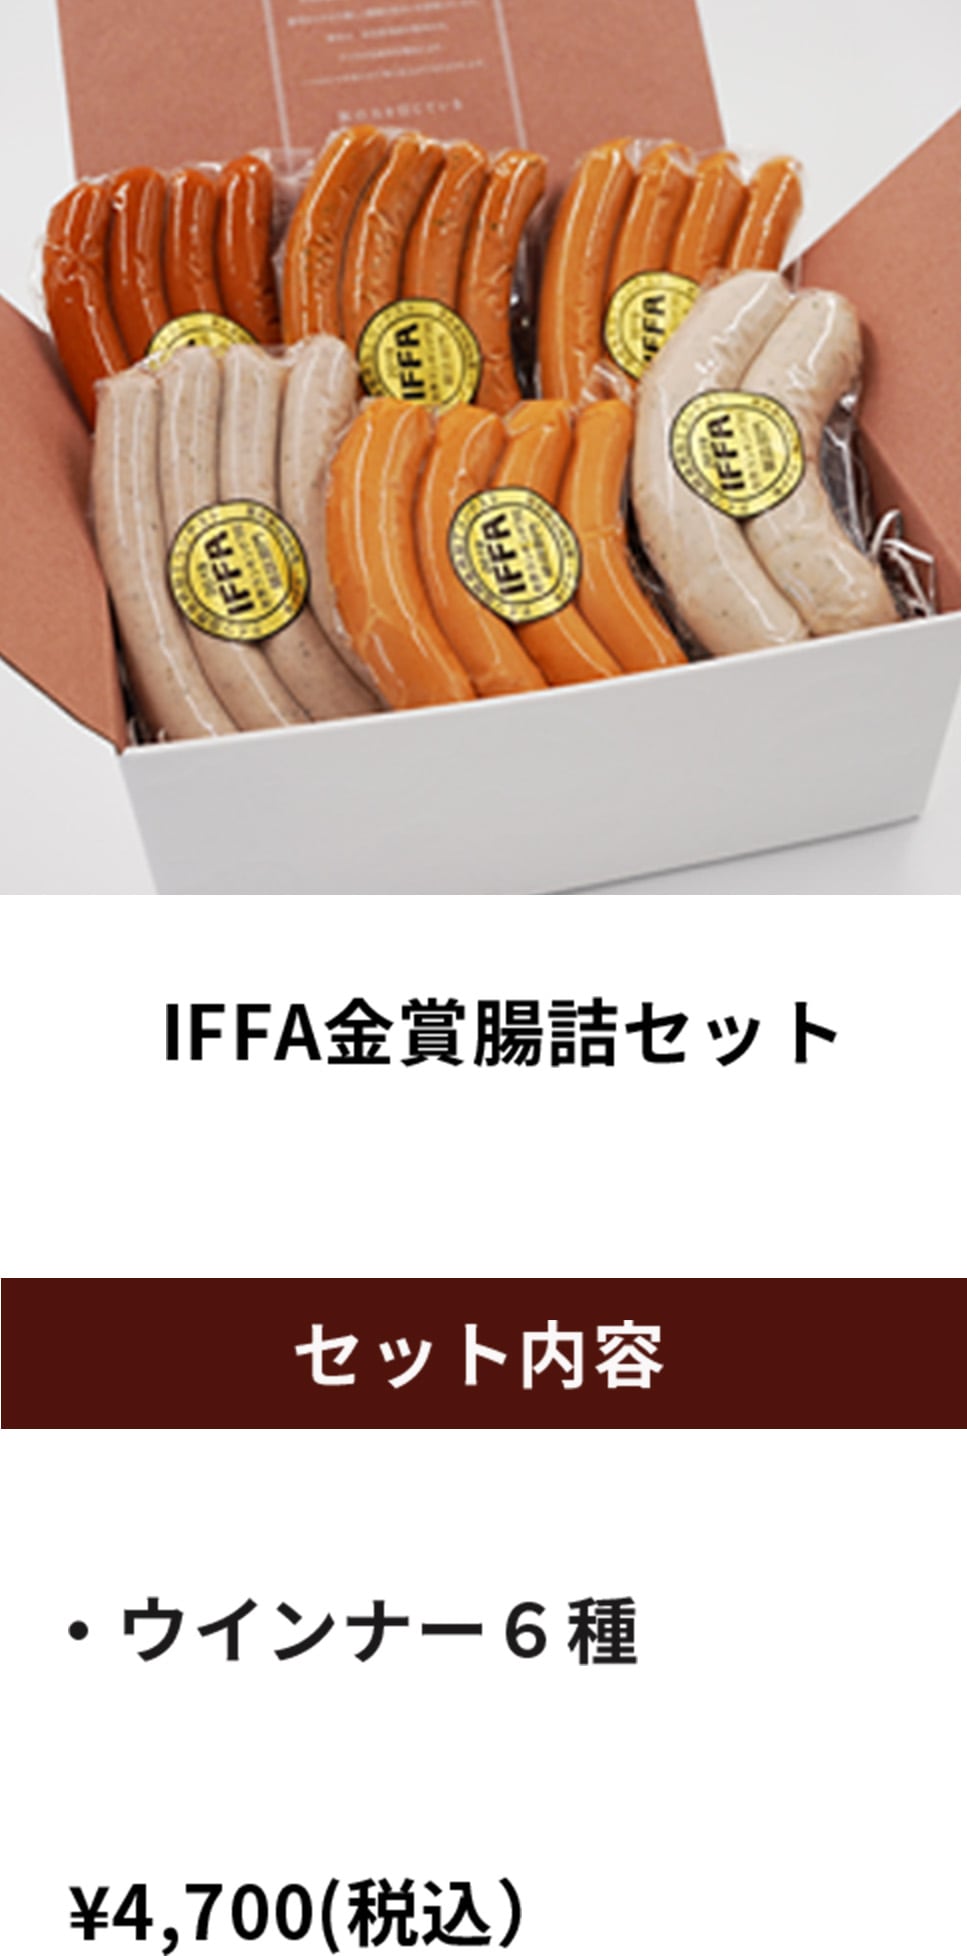 IFFA金賞腸詰セット